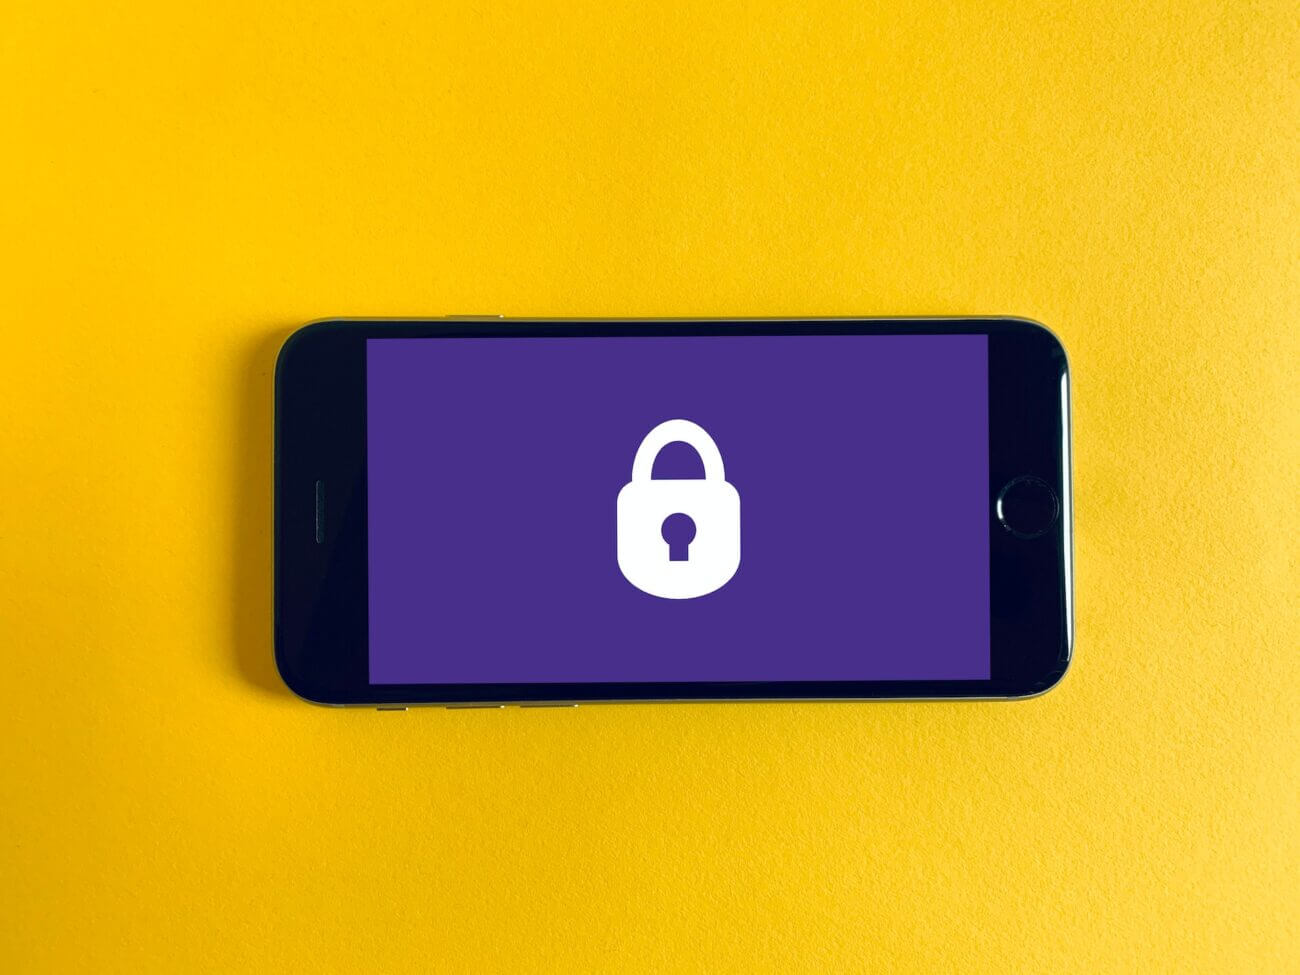 A horizontal smartphone displays a lock icon